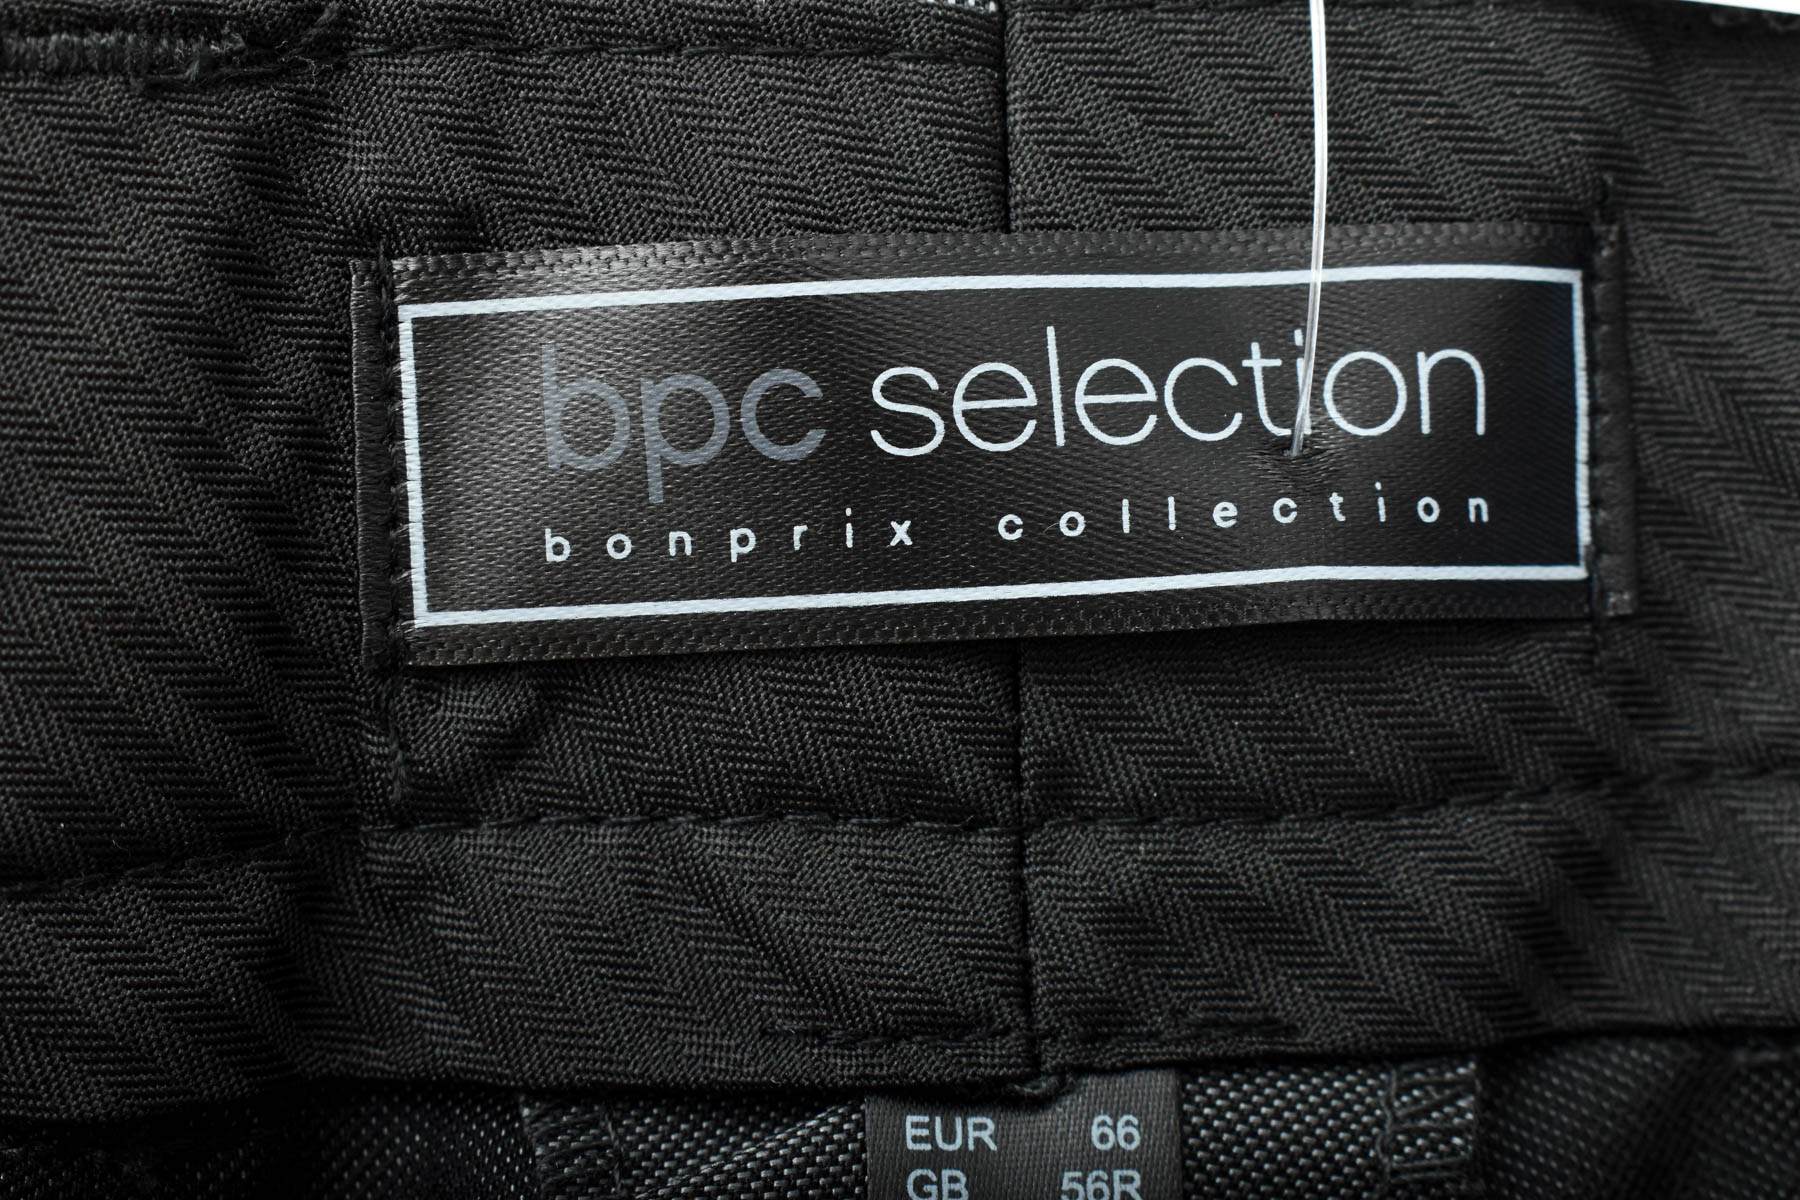 Pantalon pentru bărbați - Bpc selection bonprix collection - 2